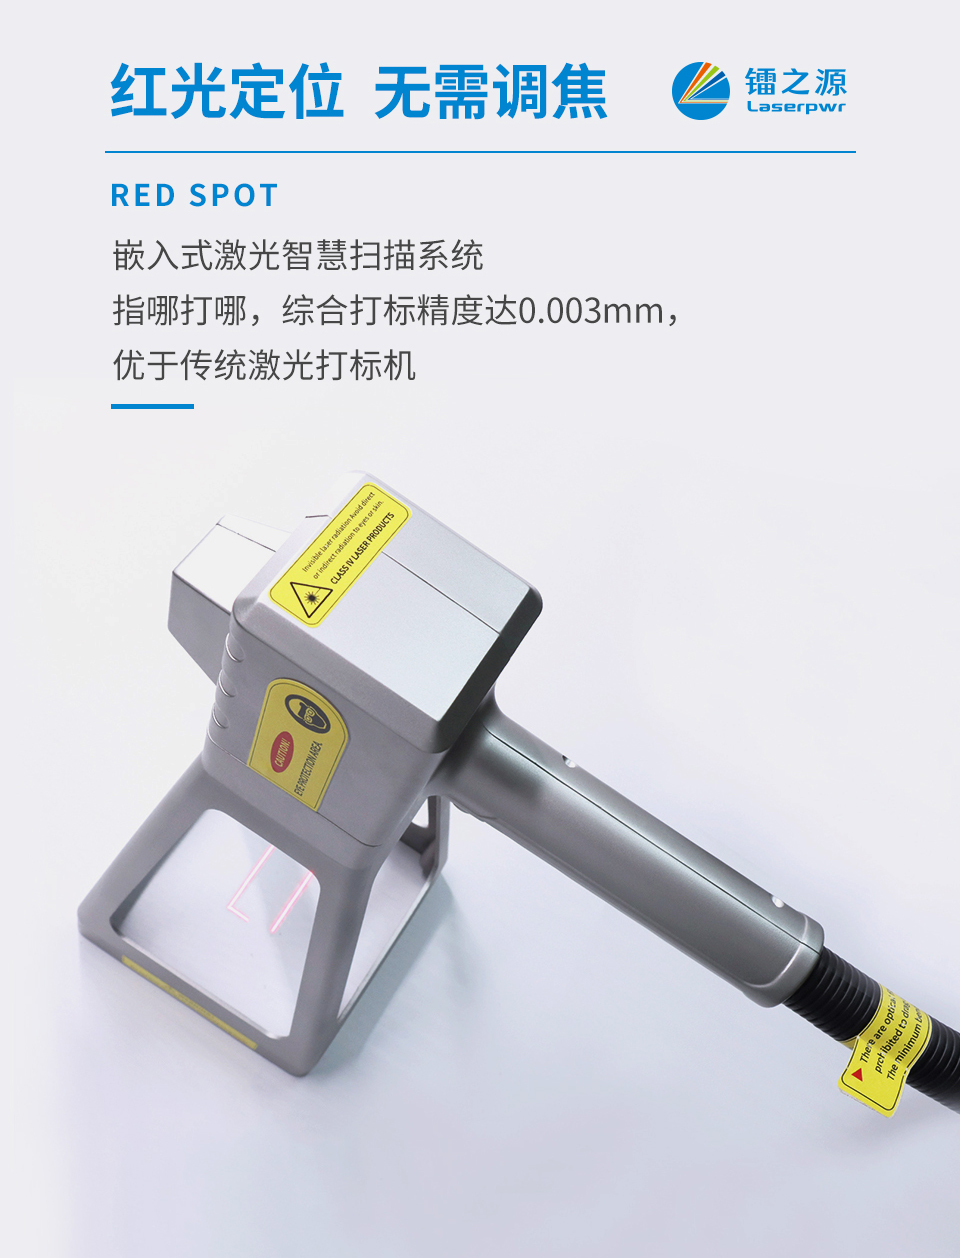 Cement pole 3m dedicated handheld portable laser engraving machine Pole tower manufacturer identification engraving laser etching machine